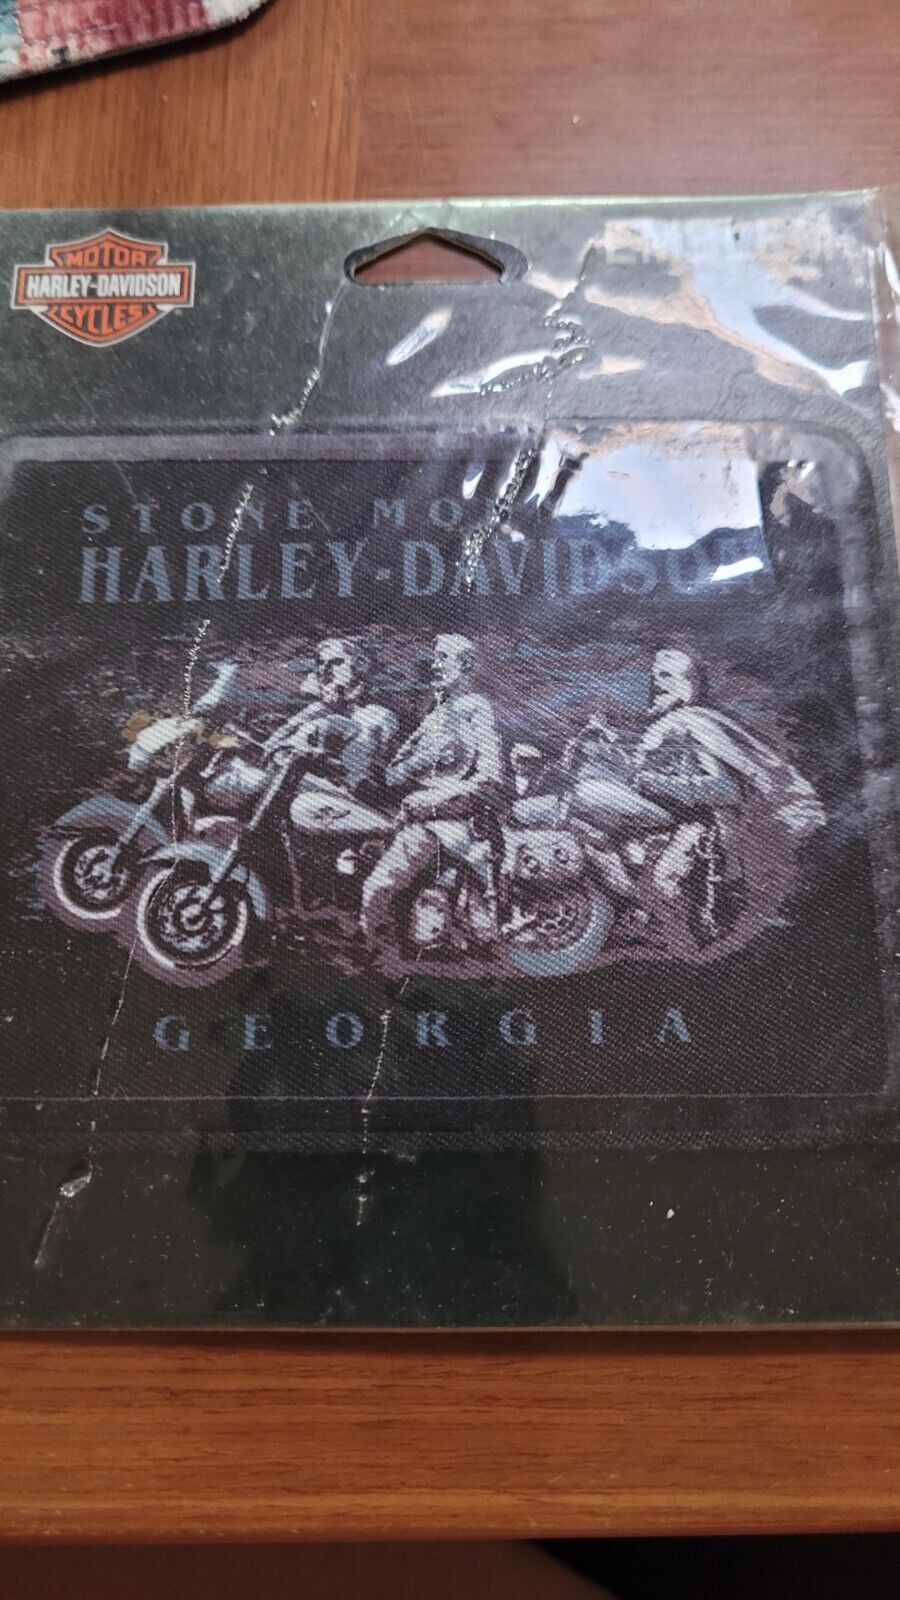 NIP Harley Davidson Stone Mountain, Georgia Riding Patch Motorcycle